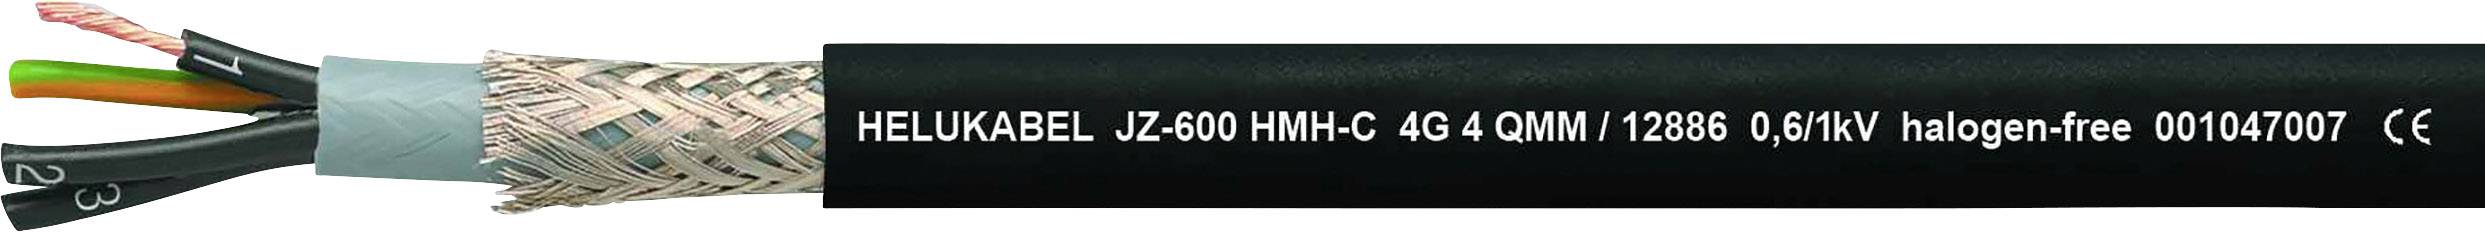 HELUKABEL JZ-600 HMH-C Steuerleitung 3 G 1.50 mm² Schwarz 12871-500 500 m